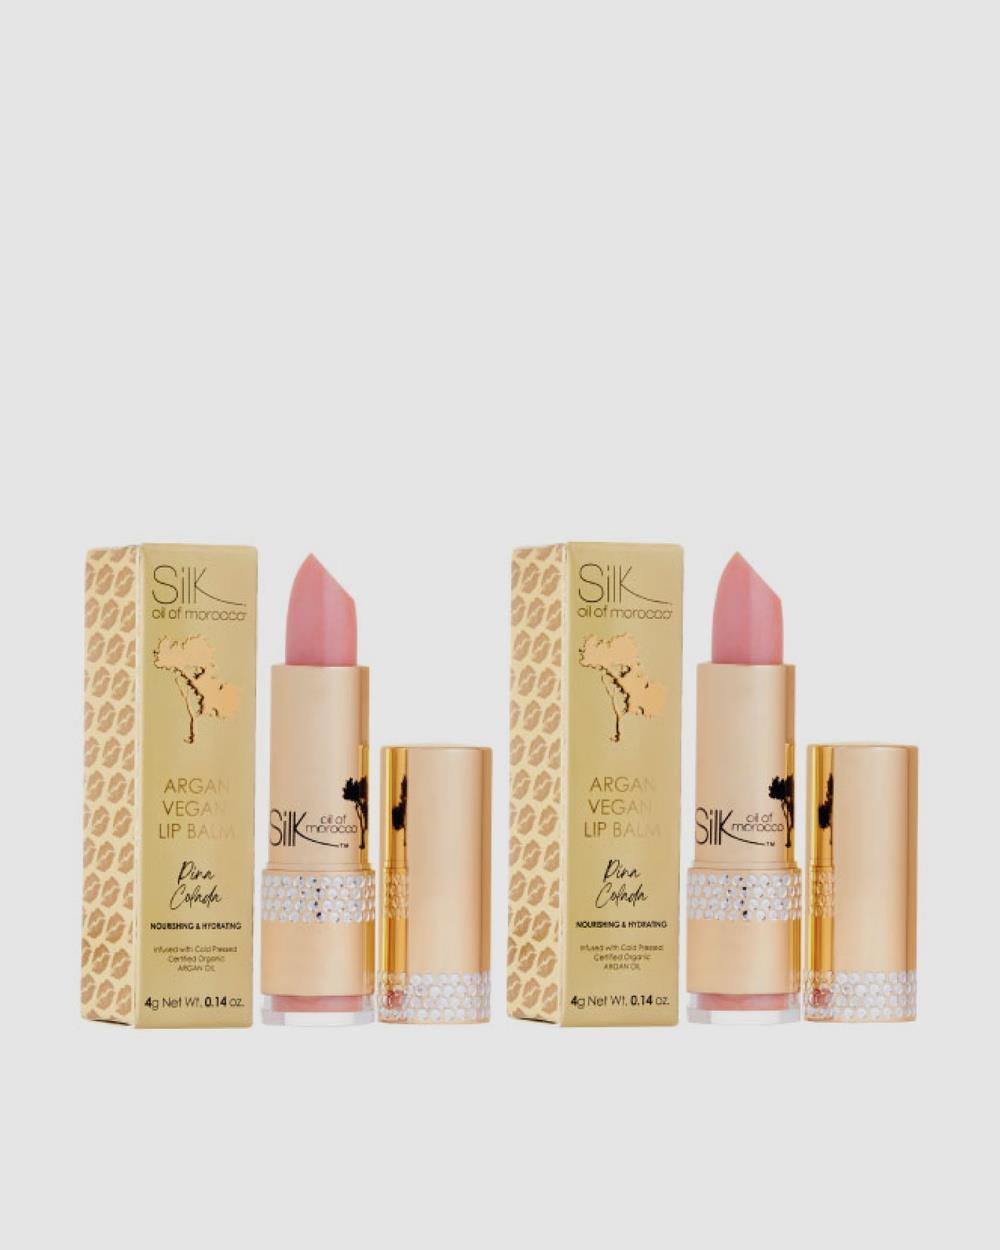 Silk Oil of Morocco - Argan Lip Balm Duo Pack Pina Colada Value Pack - Beauty (Pink) Argan Lip Balm - Duo Pack - Pina Colada - Value Pack